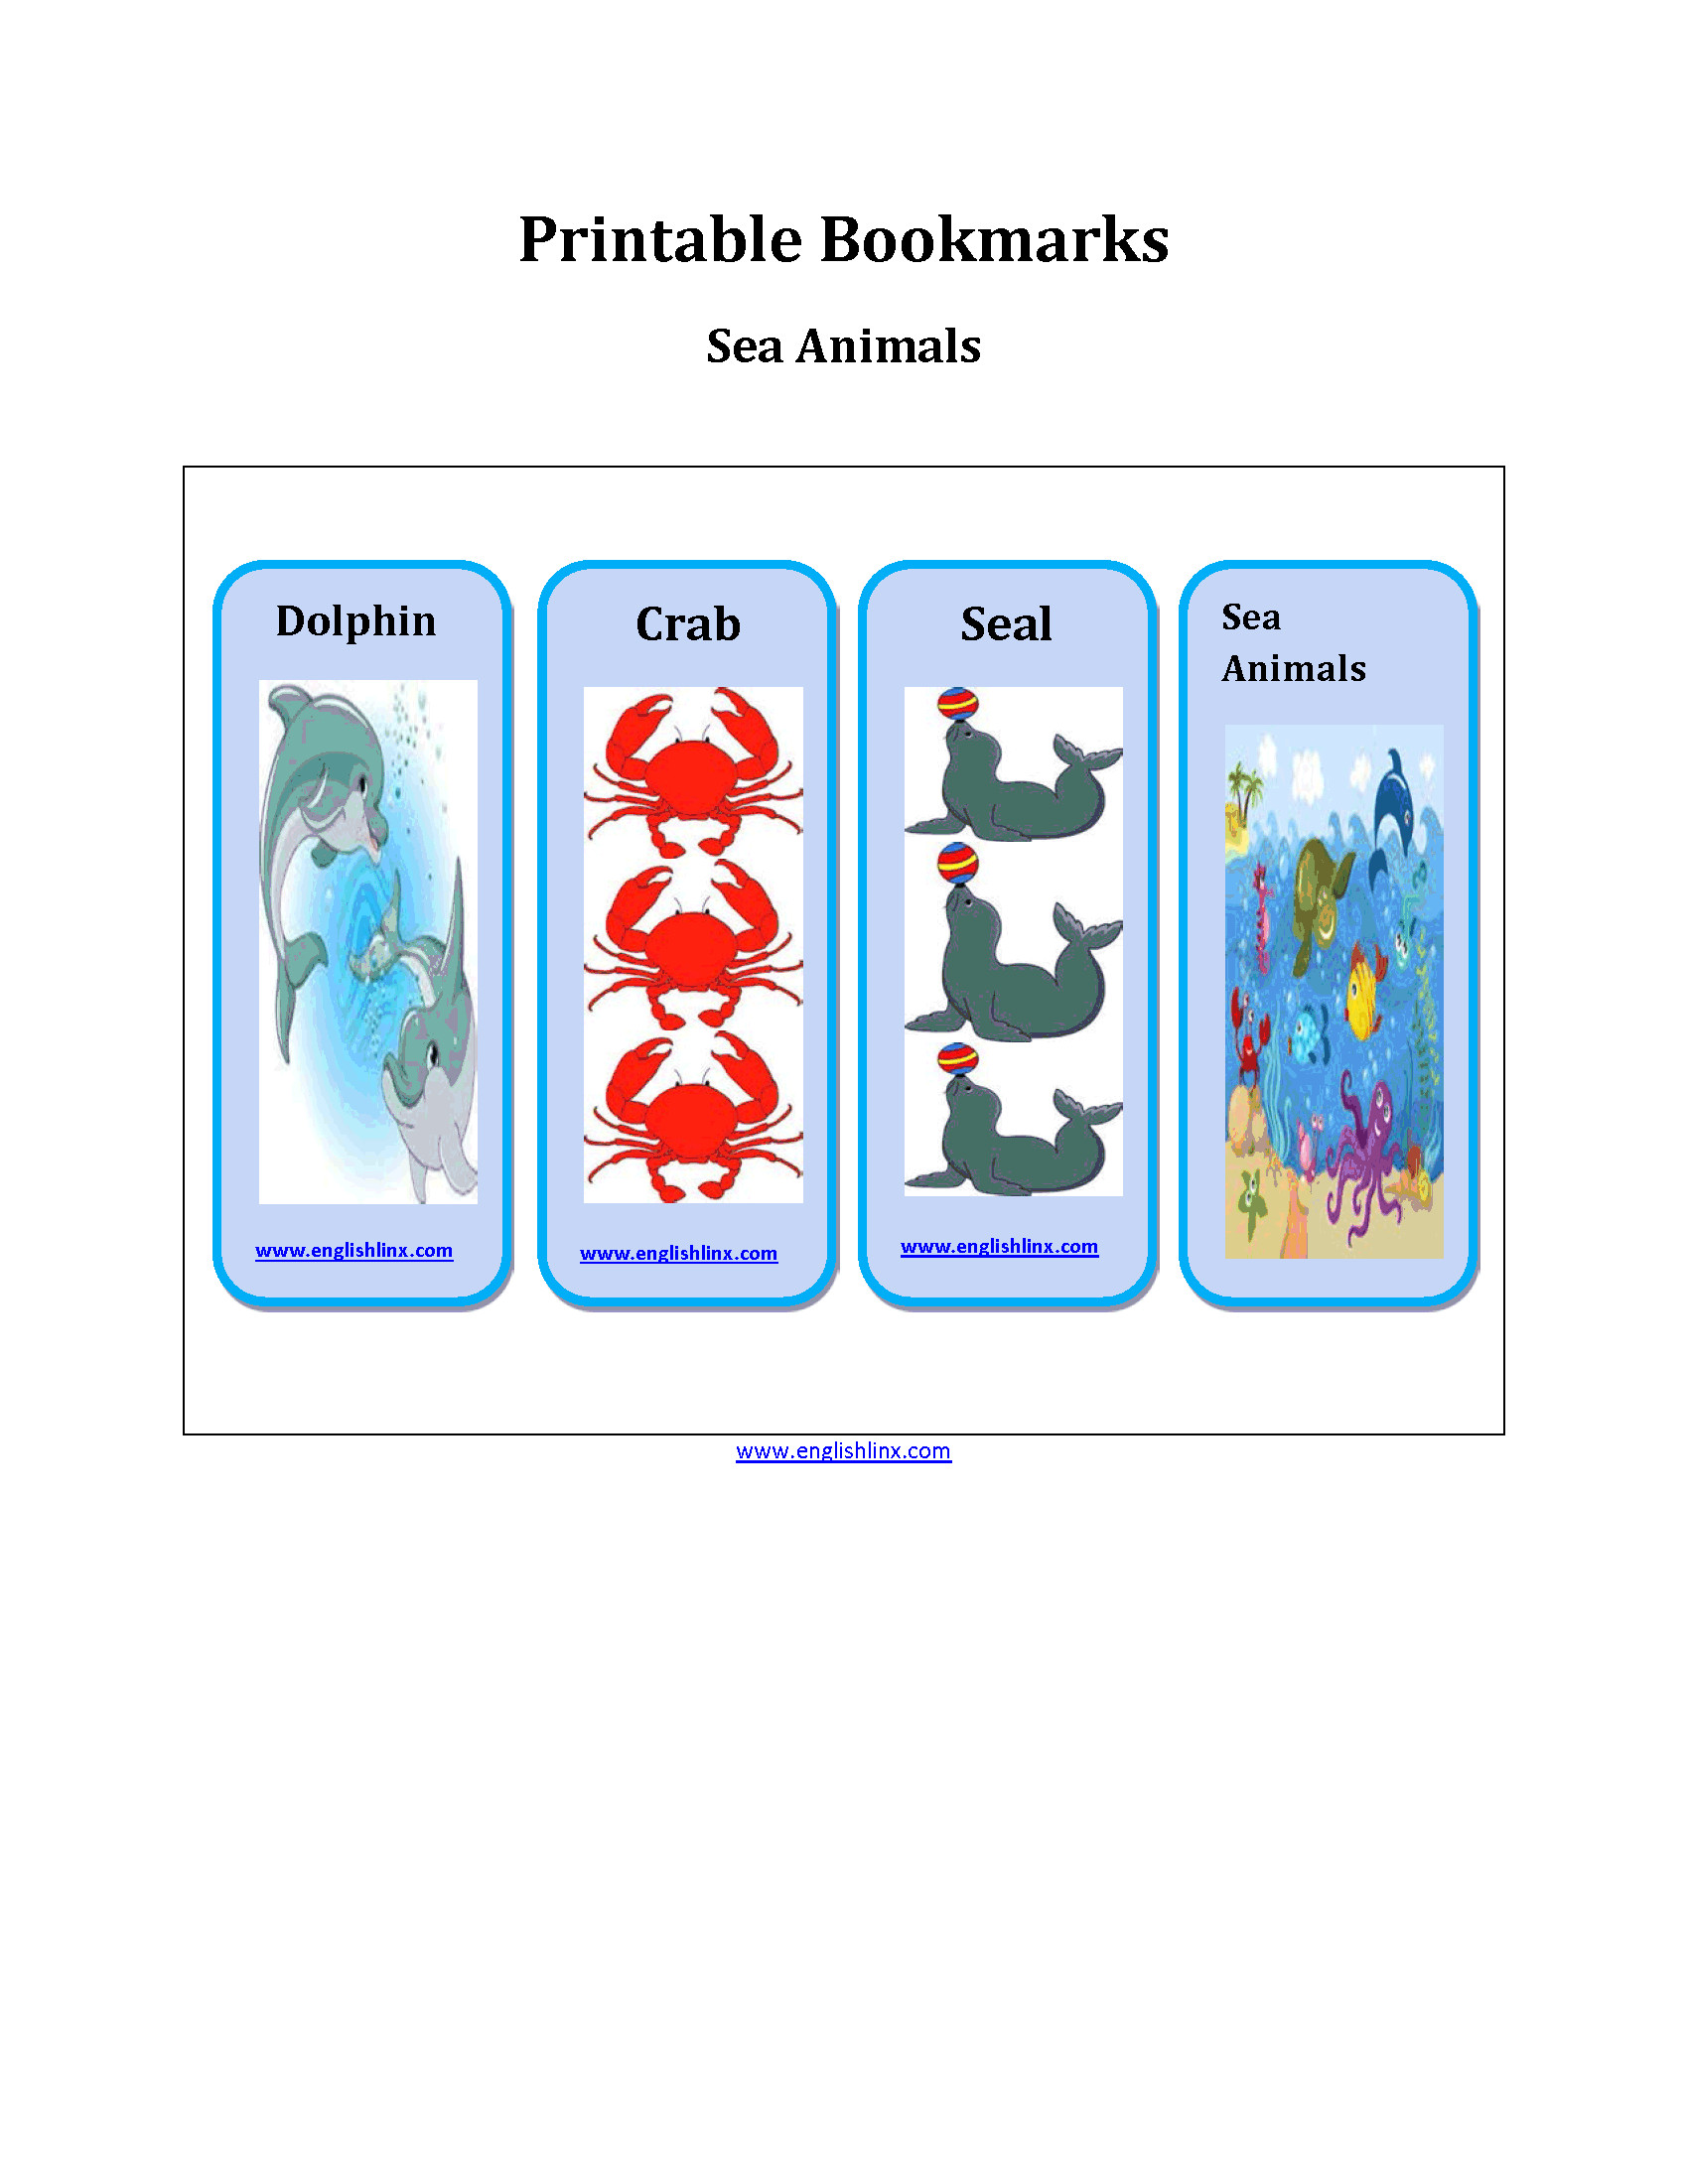 Sea Animals Bookmarks